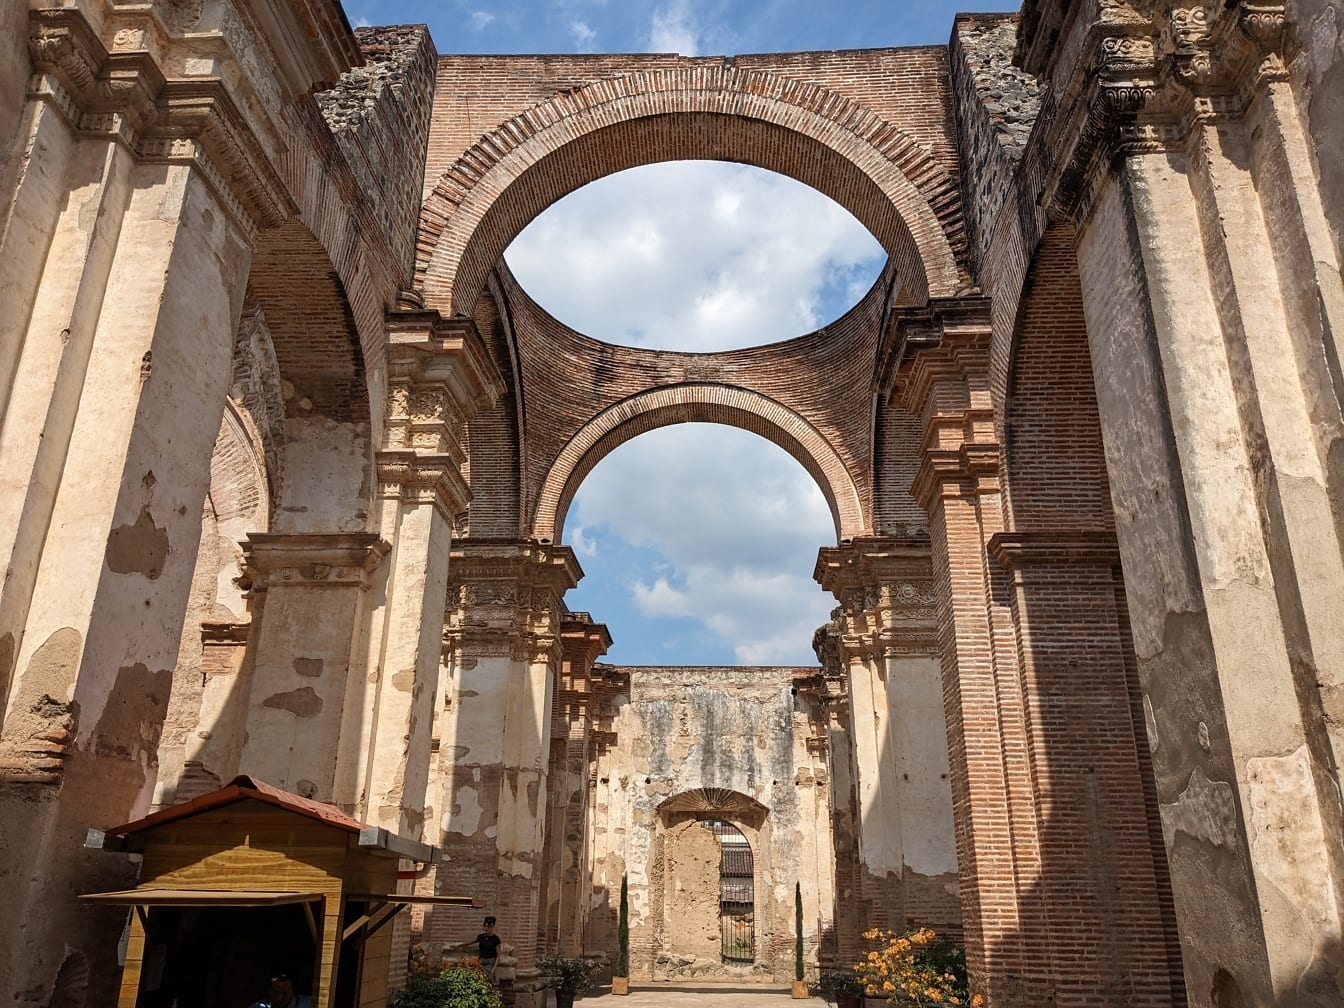 Ruinele catedralei cu arcade în stil arhitectural colonial în Antiqua din Guatemala